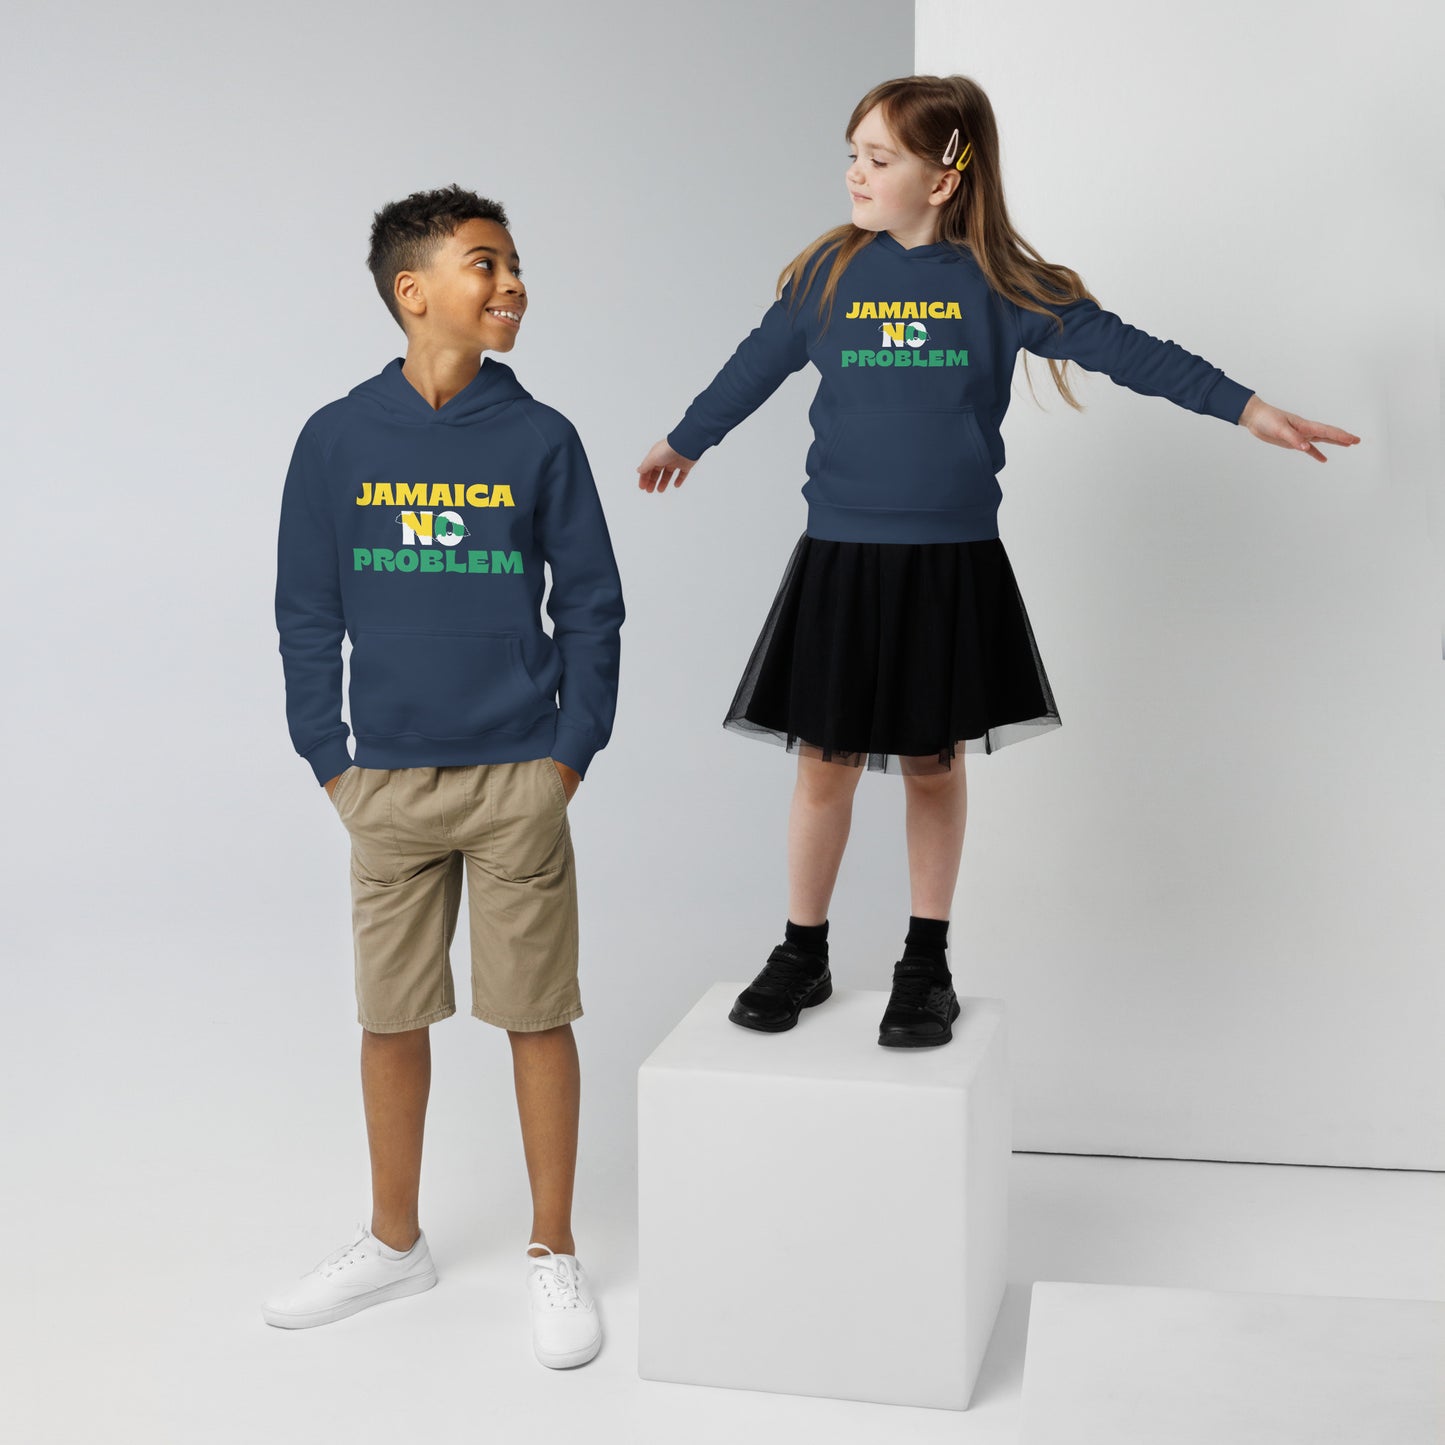 Kids eco "Jamaica No Problem" hoodie